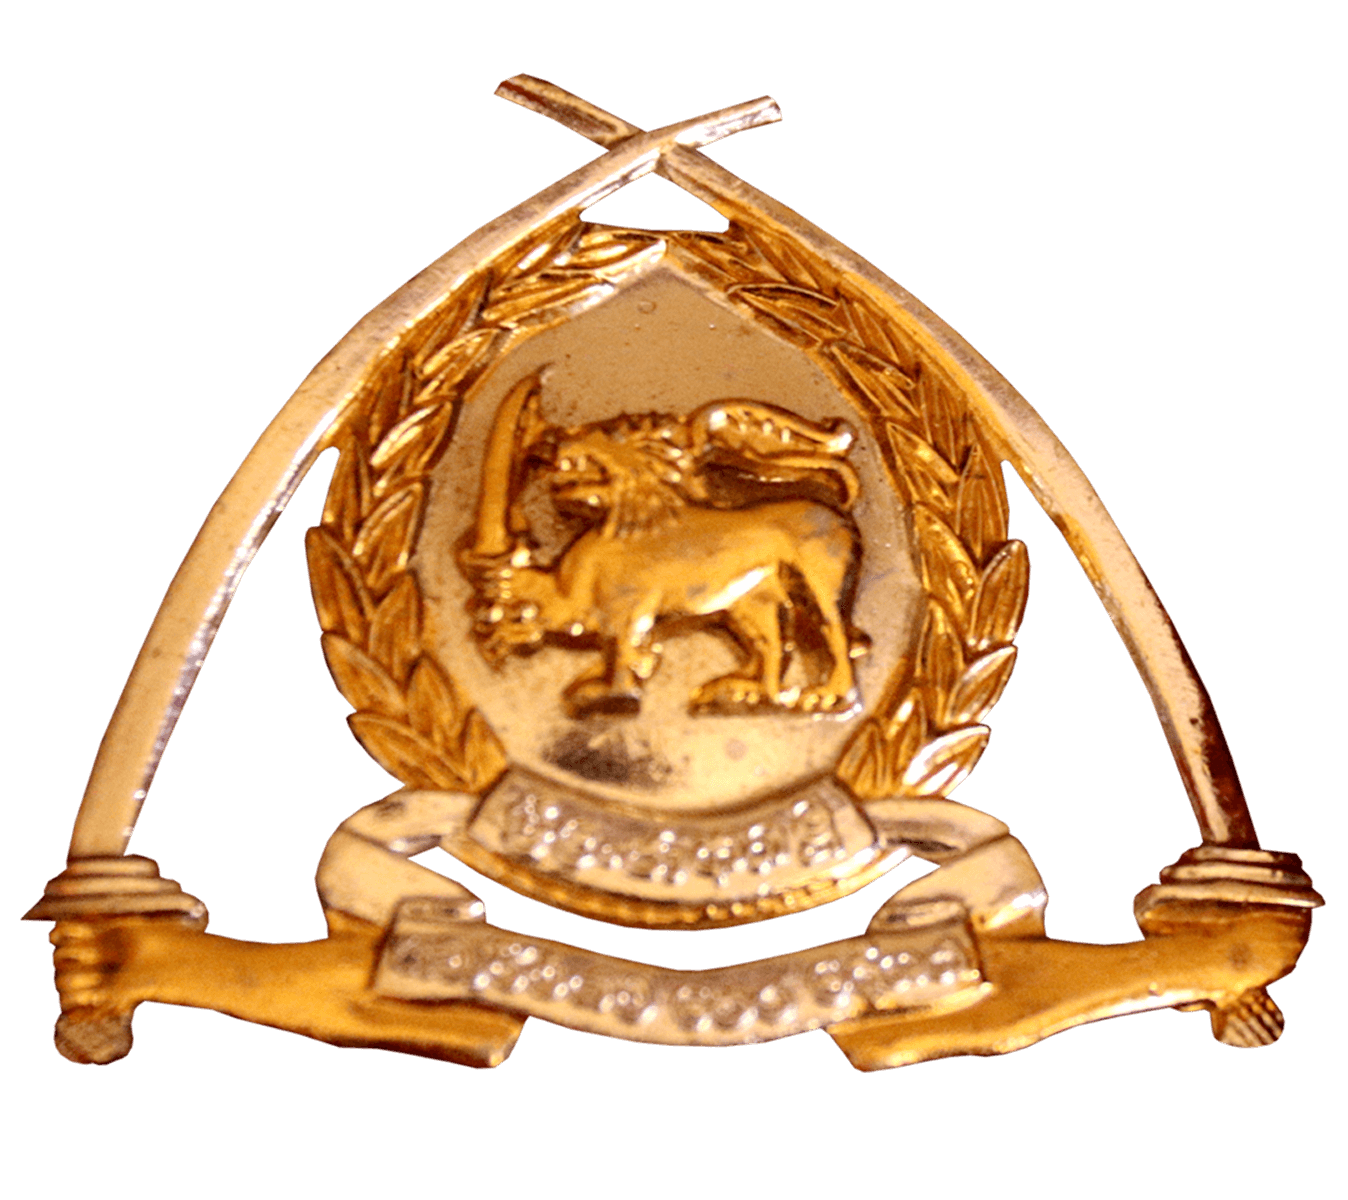 Sri Lanka National Guard